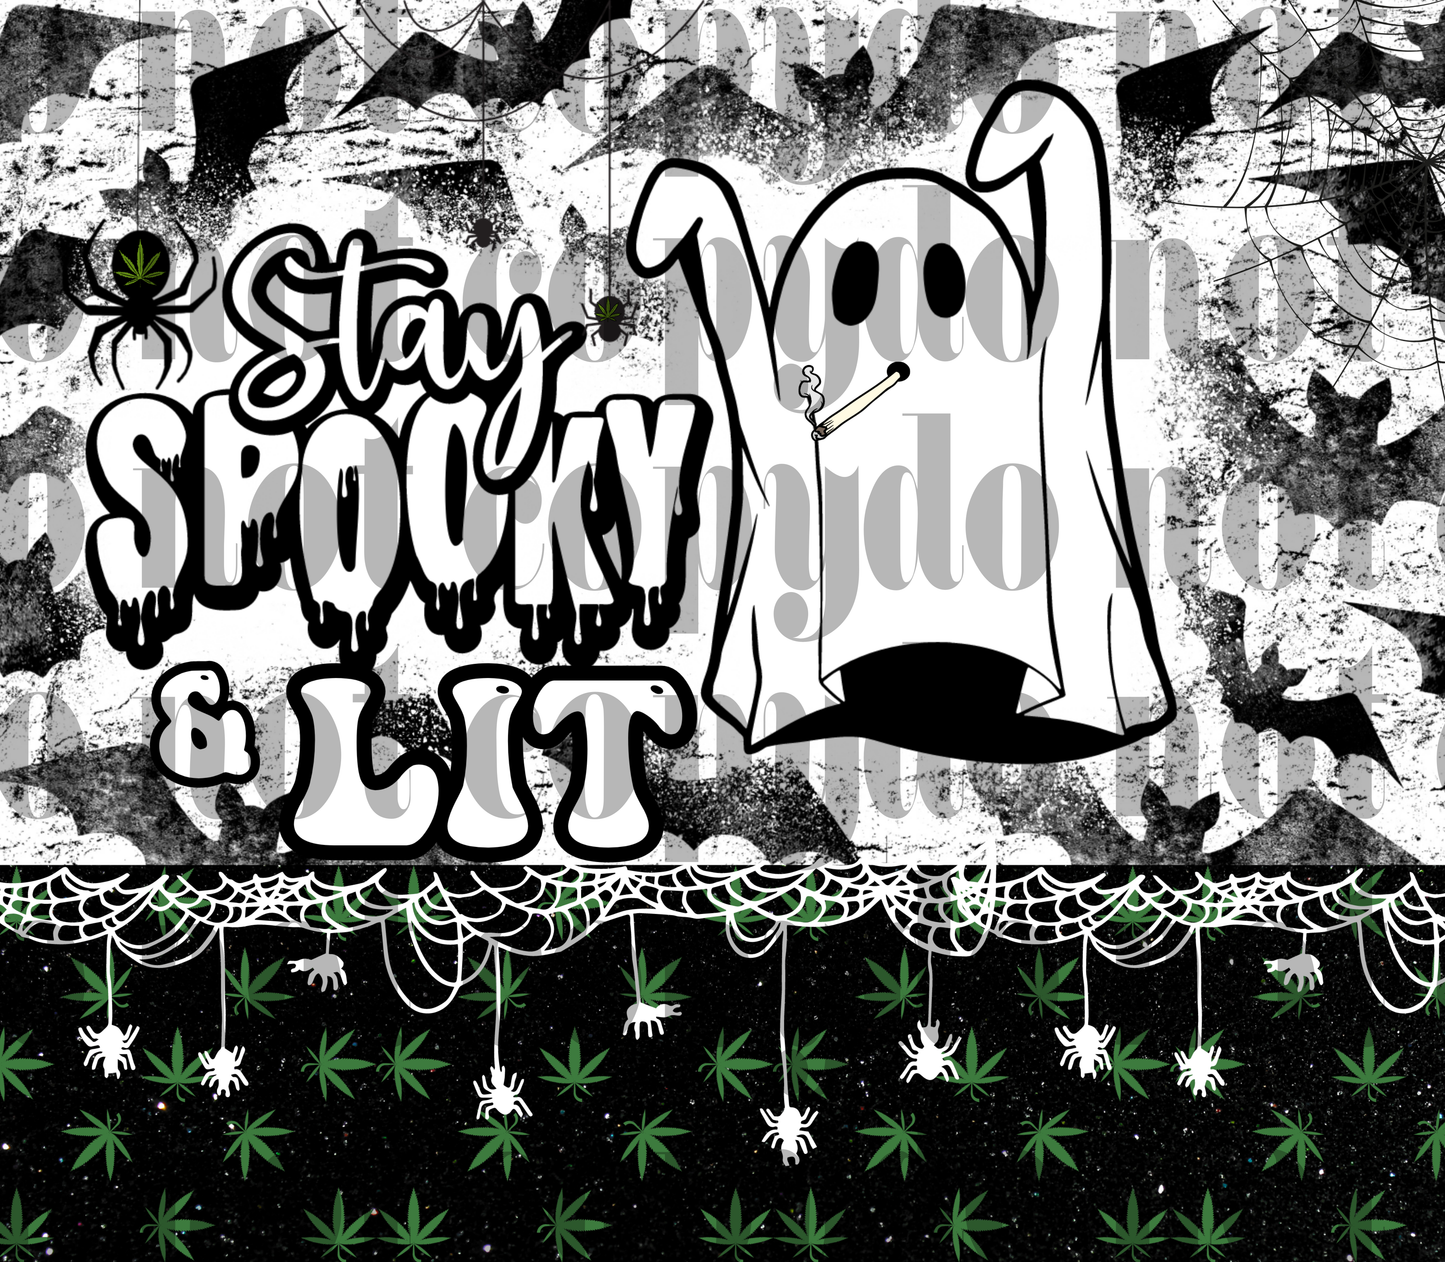 Stay spooky & lit 20oz VINYL tumblr Transfer